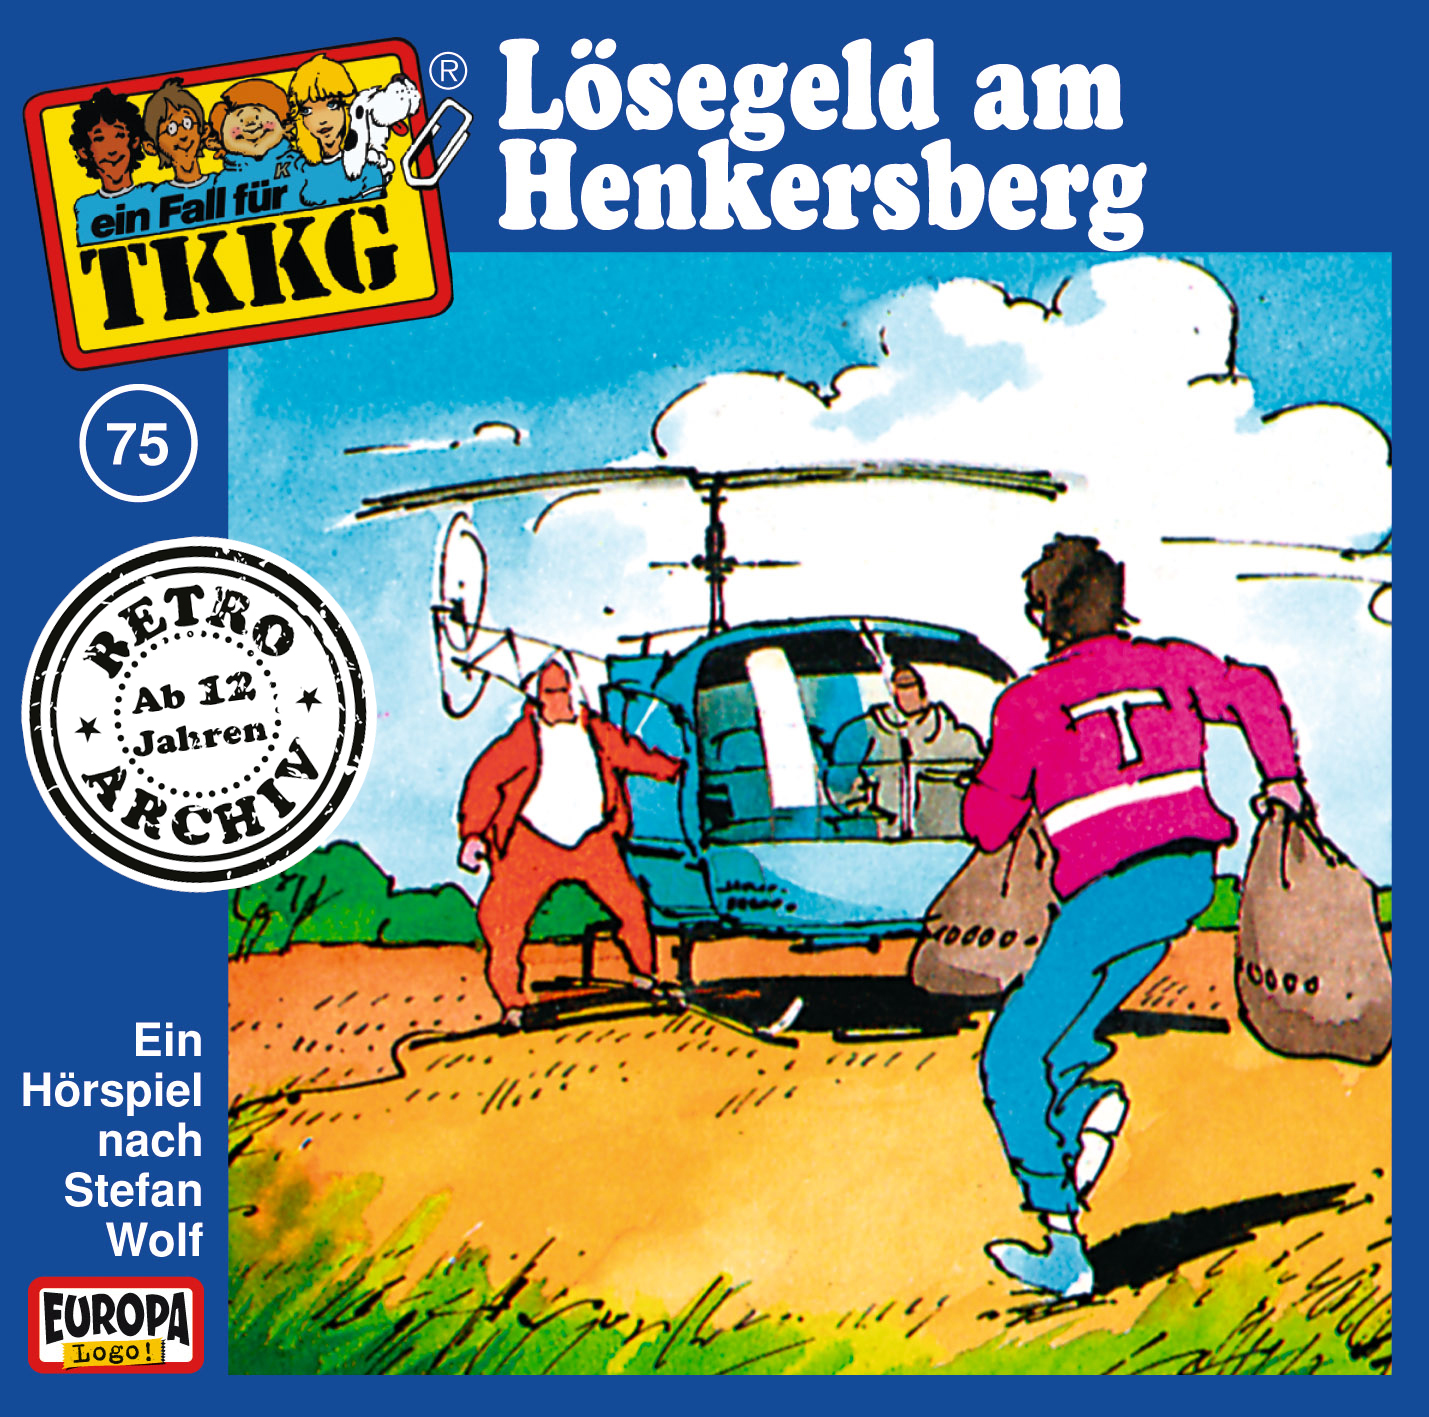 TKKG Retro-Archiv - Lösegeld am Henkersberg